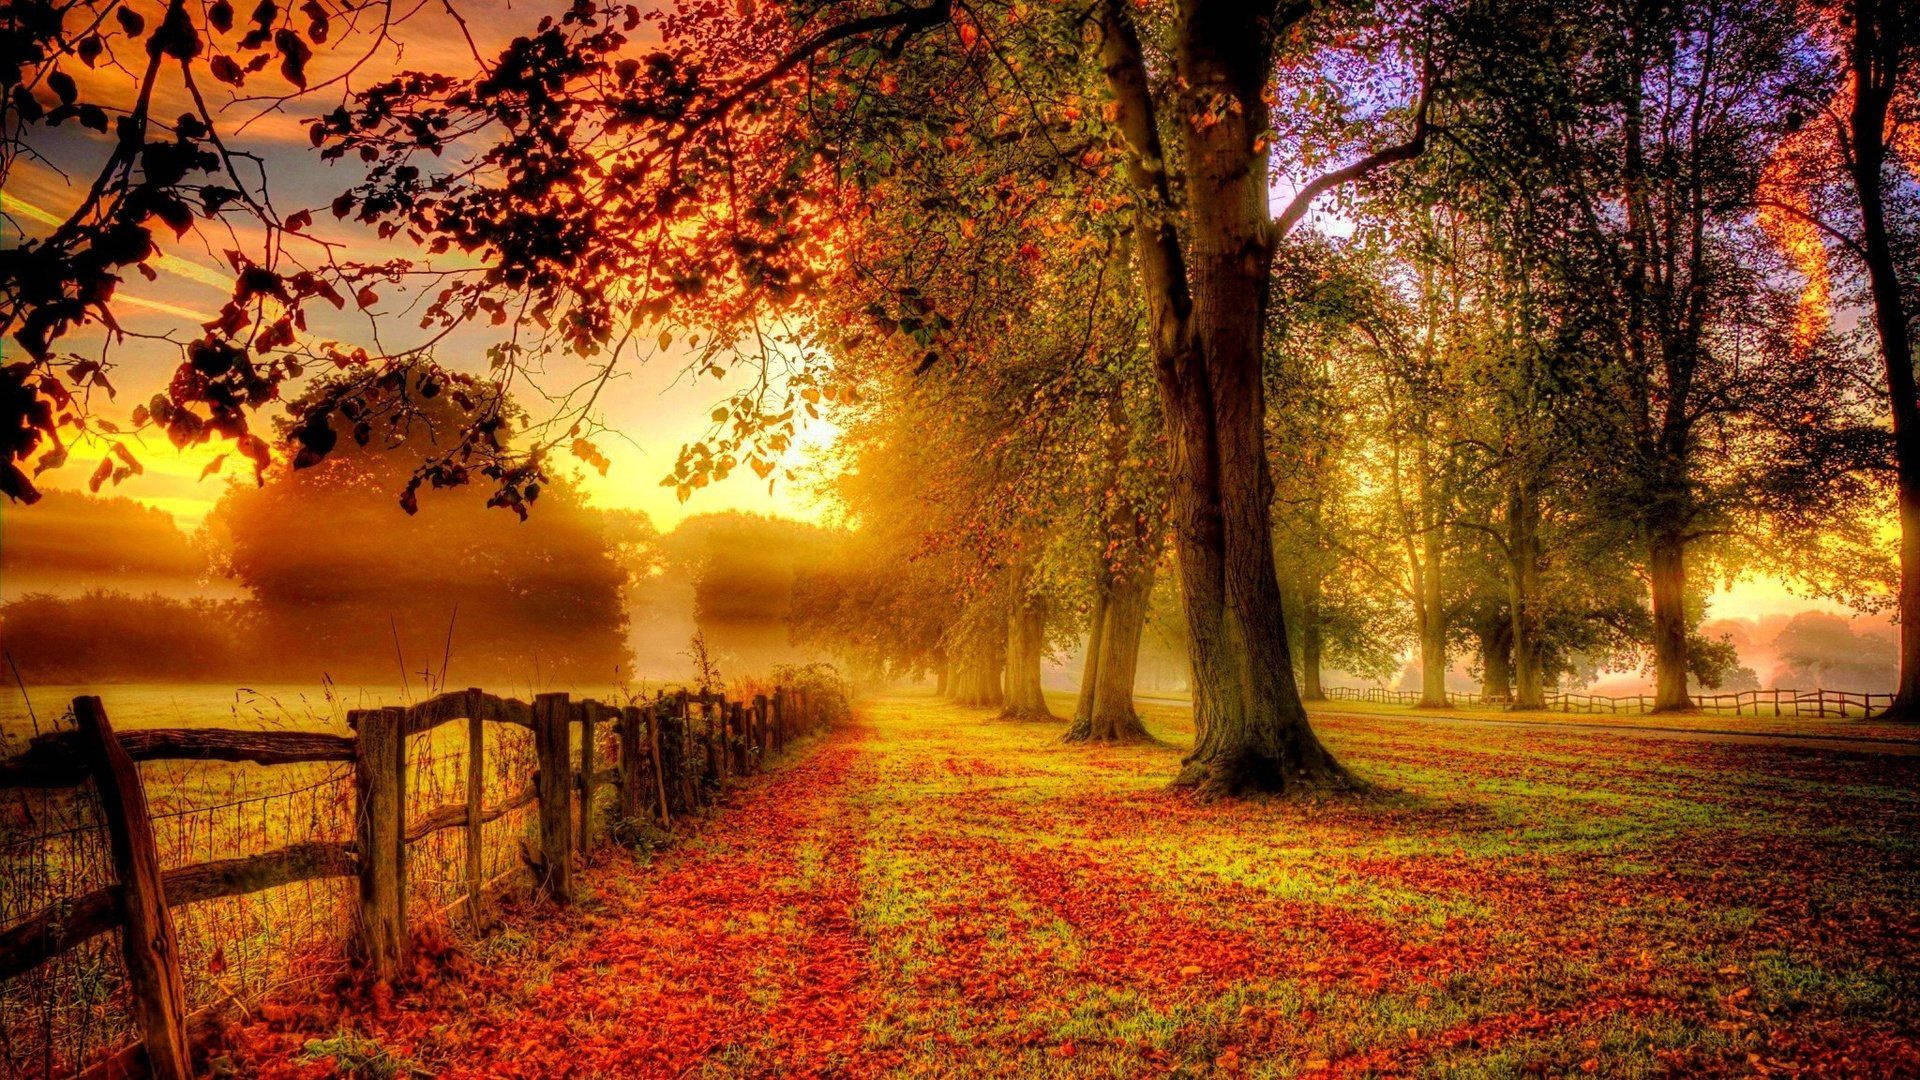 Hd Scenic Fall Autumn Background